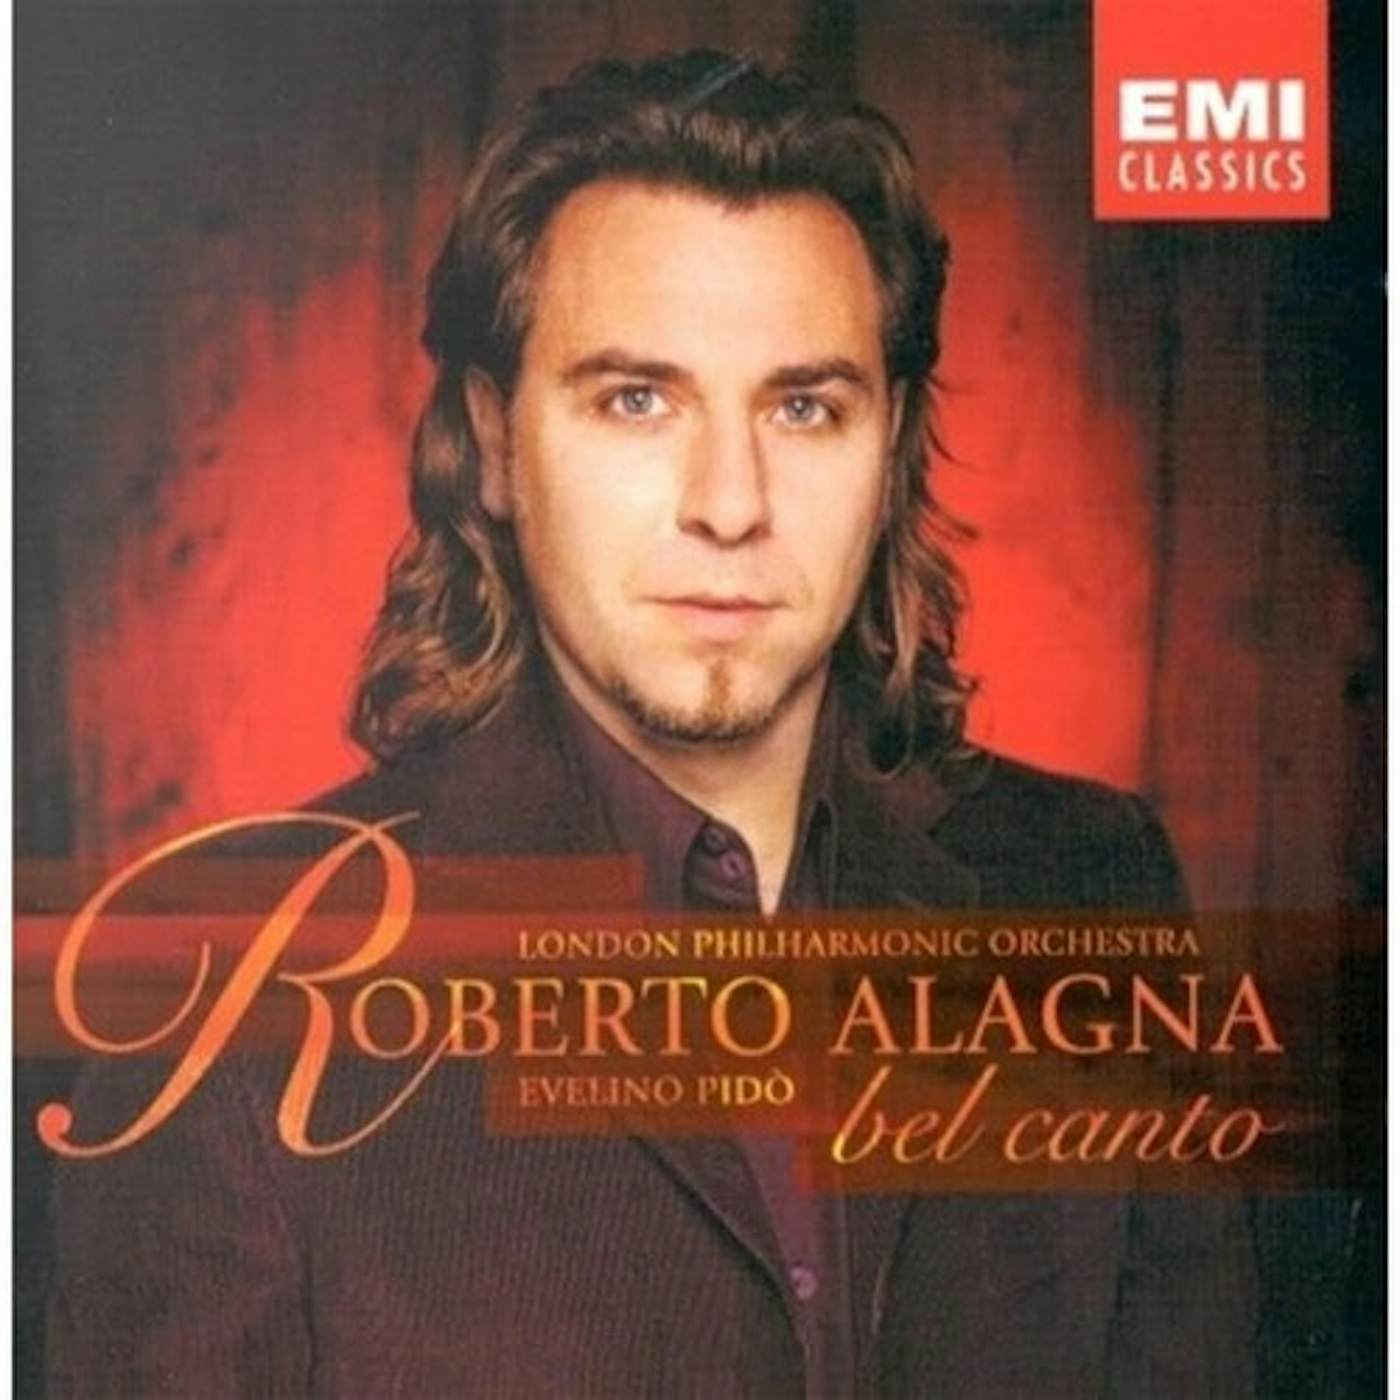 Roberto Alagna BEL CANTO Vinyl Record